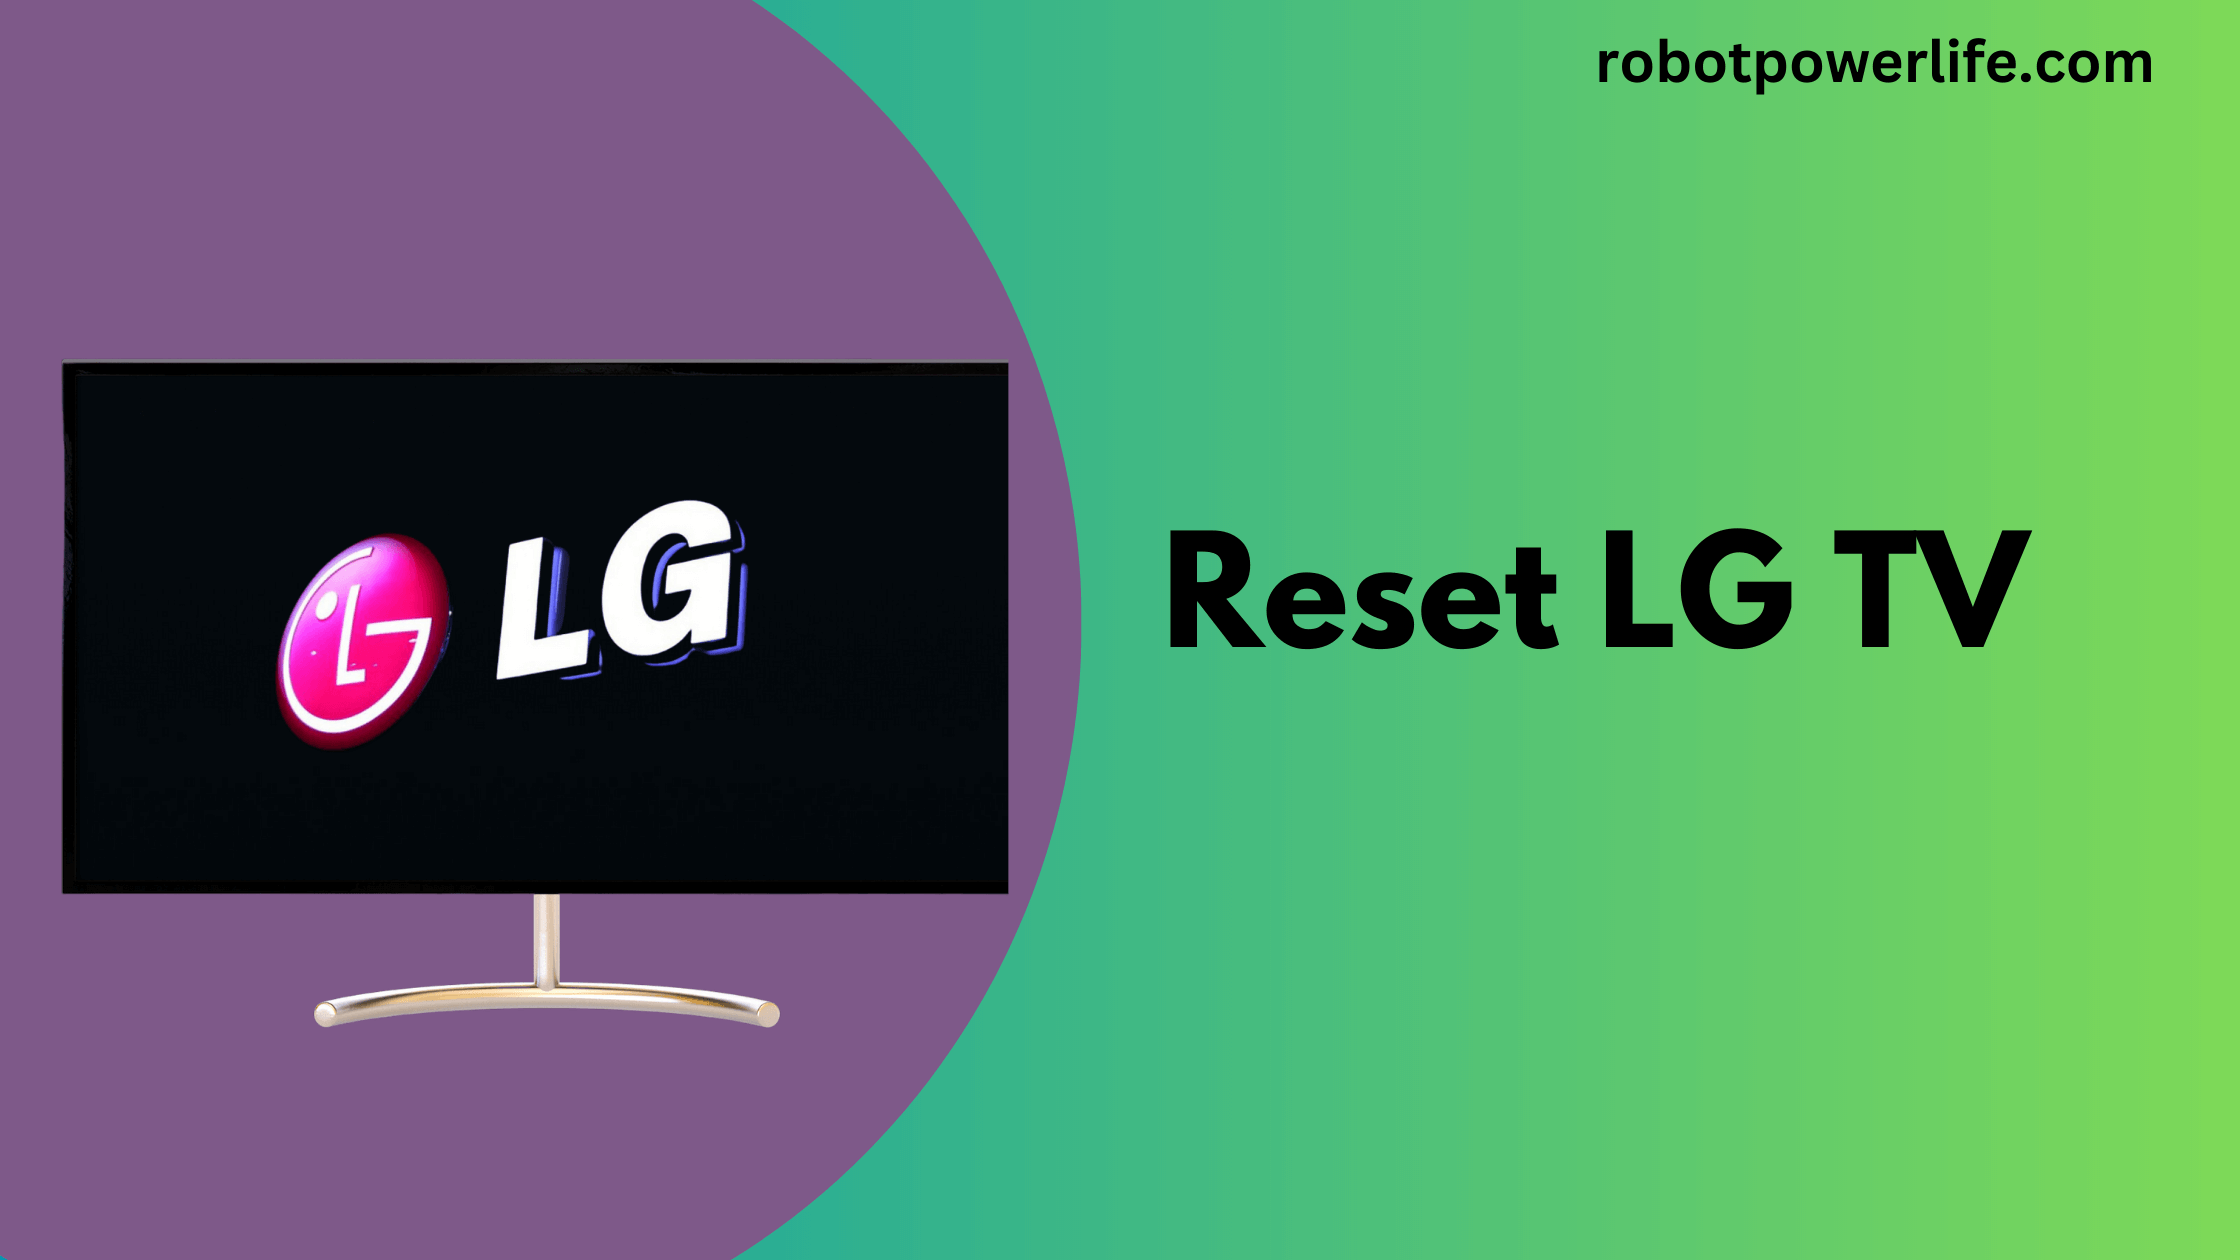 Reset LG TV